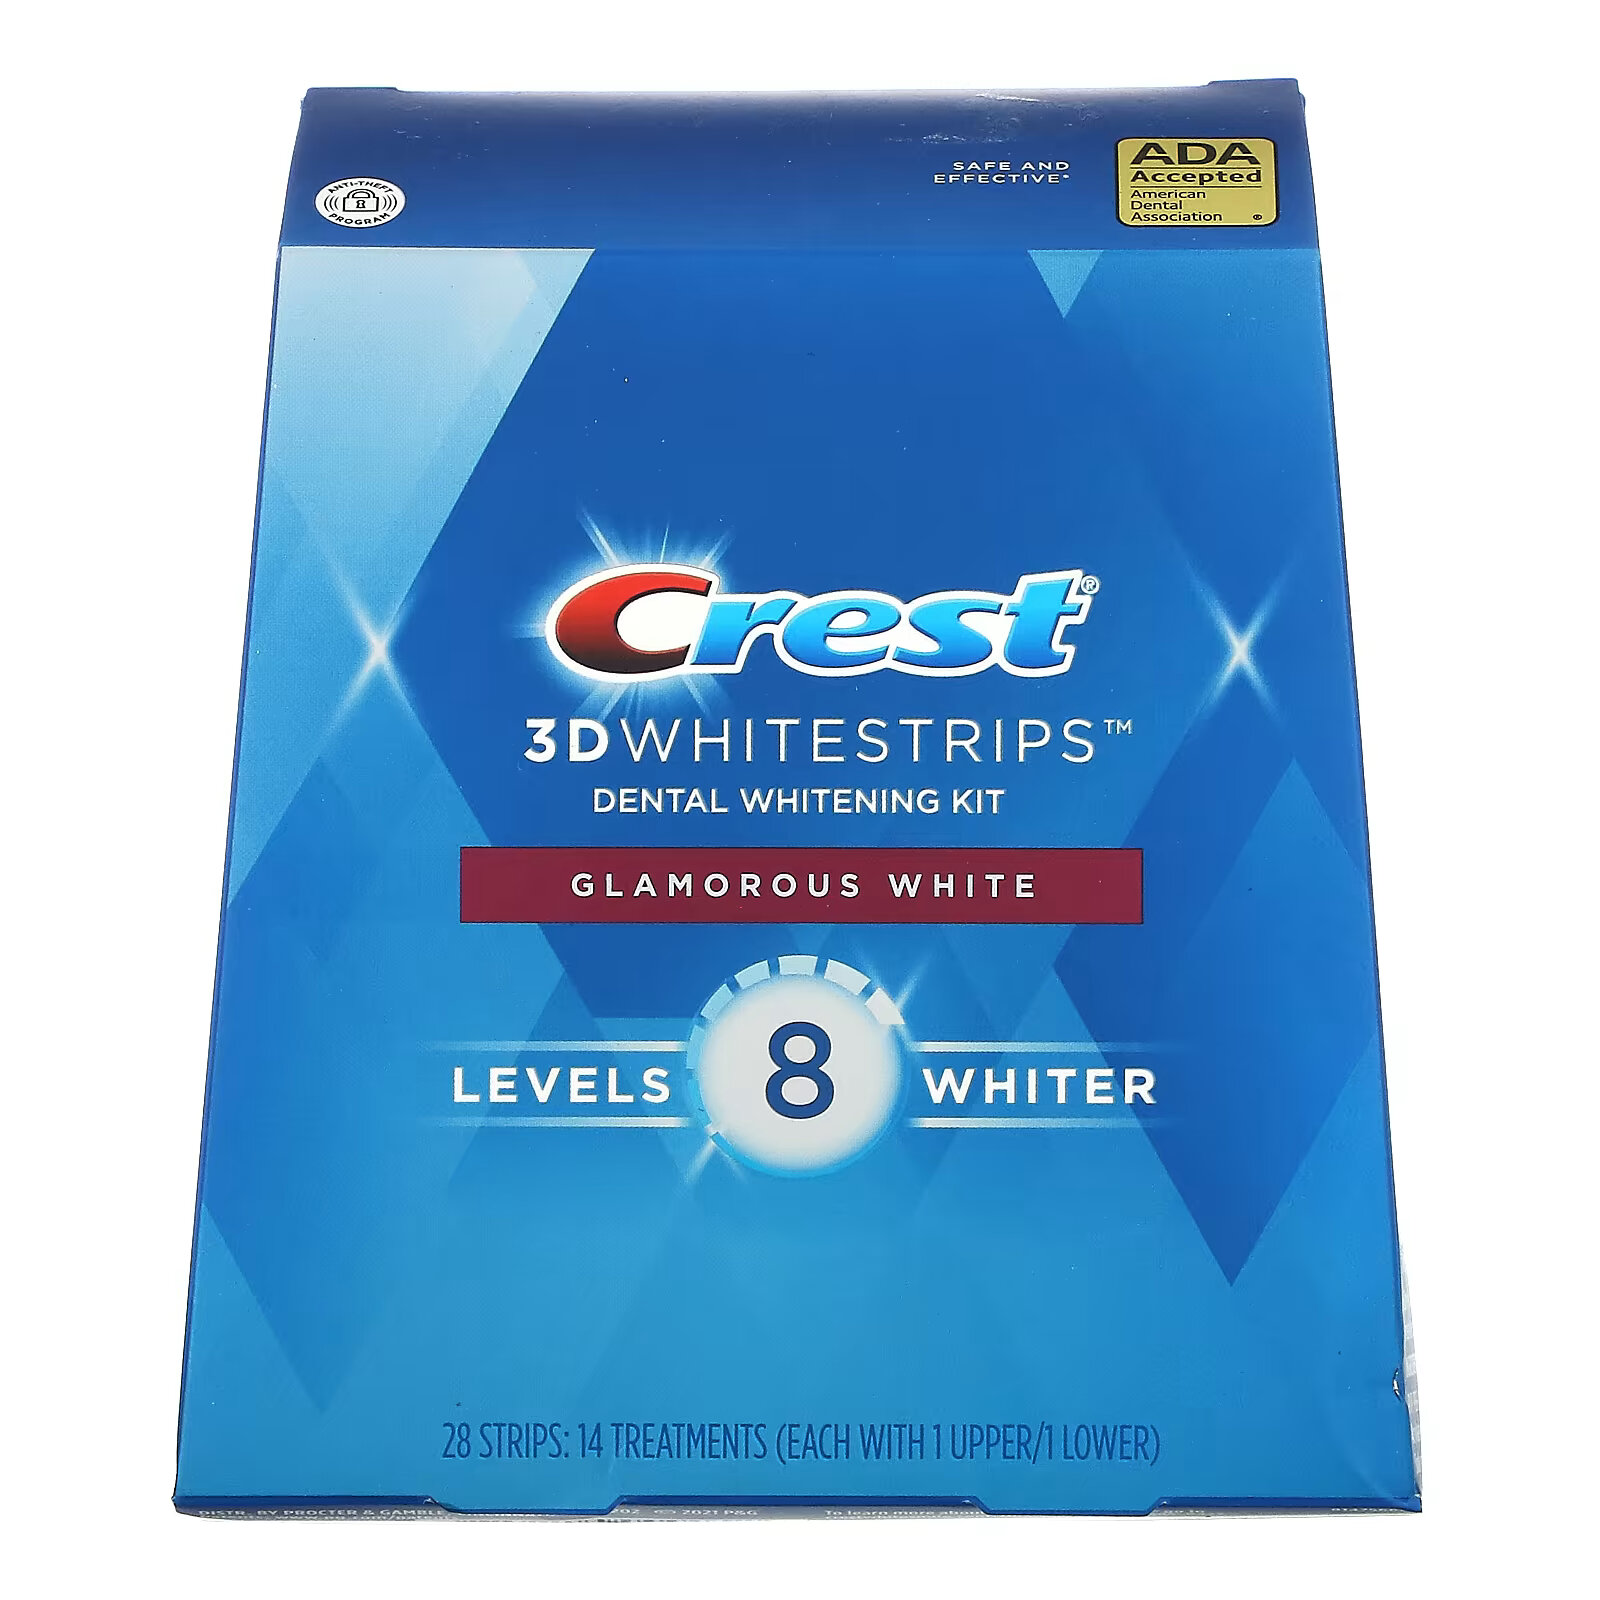 Crest, 3D Whitestrips, Glamorous White, комплект для отбеливания зубов, 28 полосок crest 3d whitestrips glamorous white комплект для отбеливания зубов 28